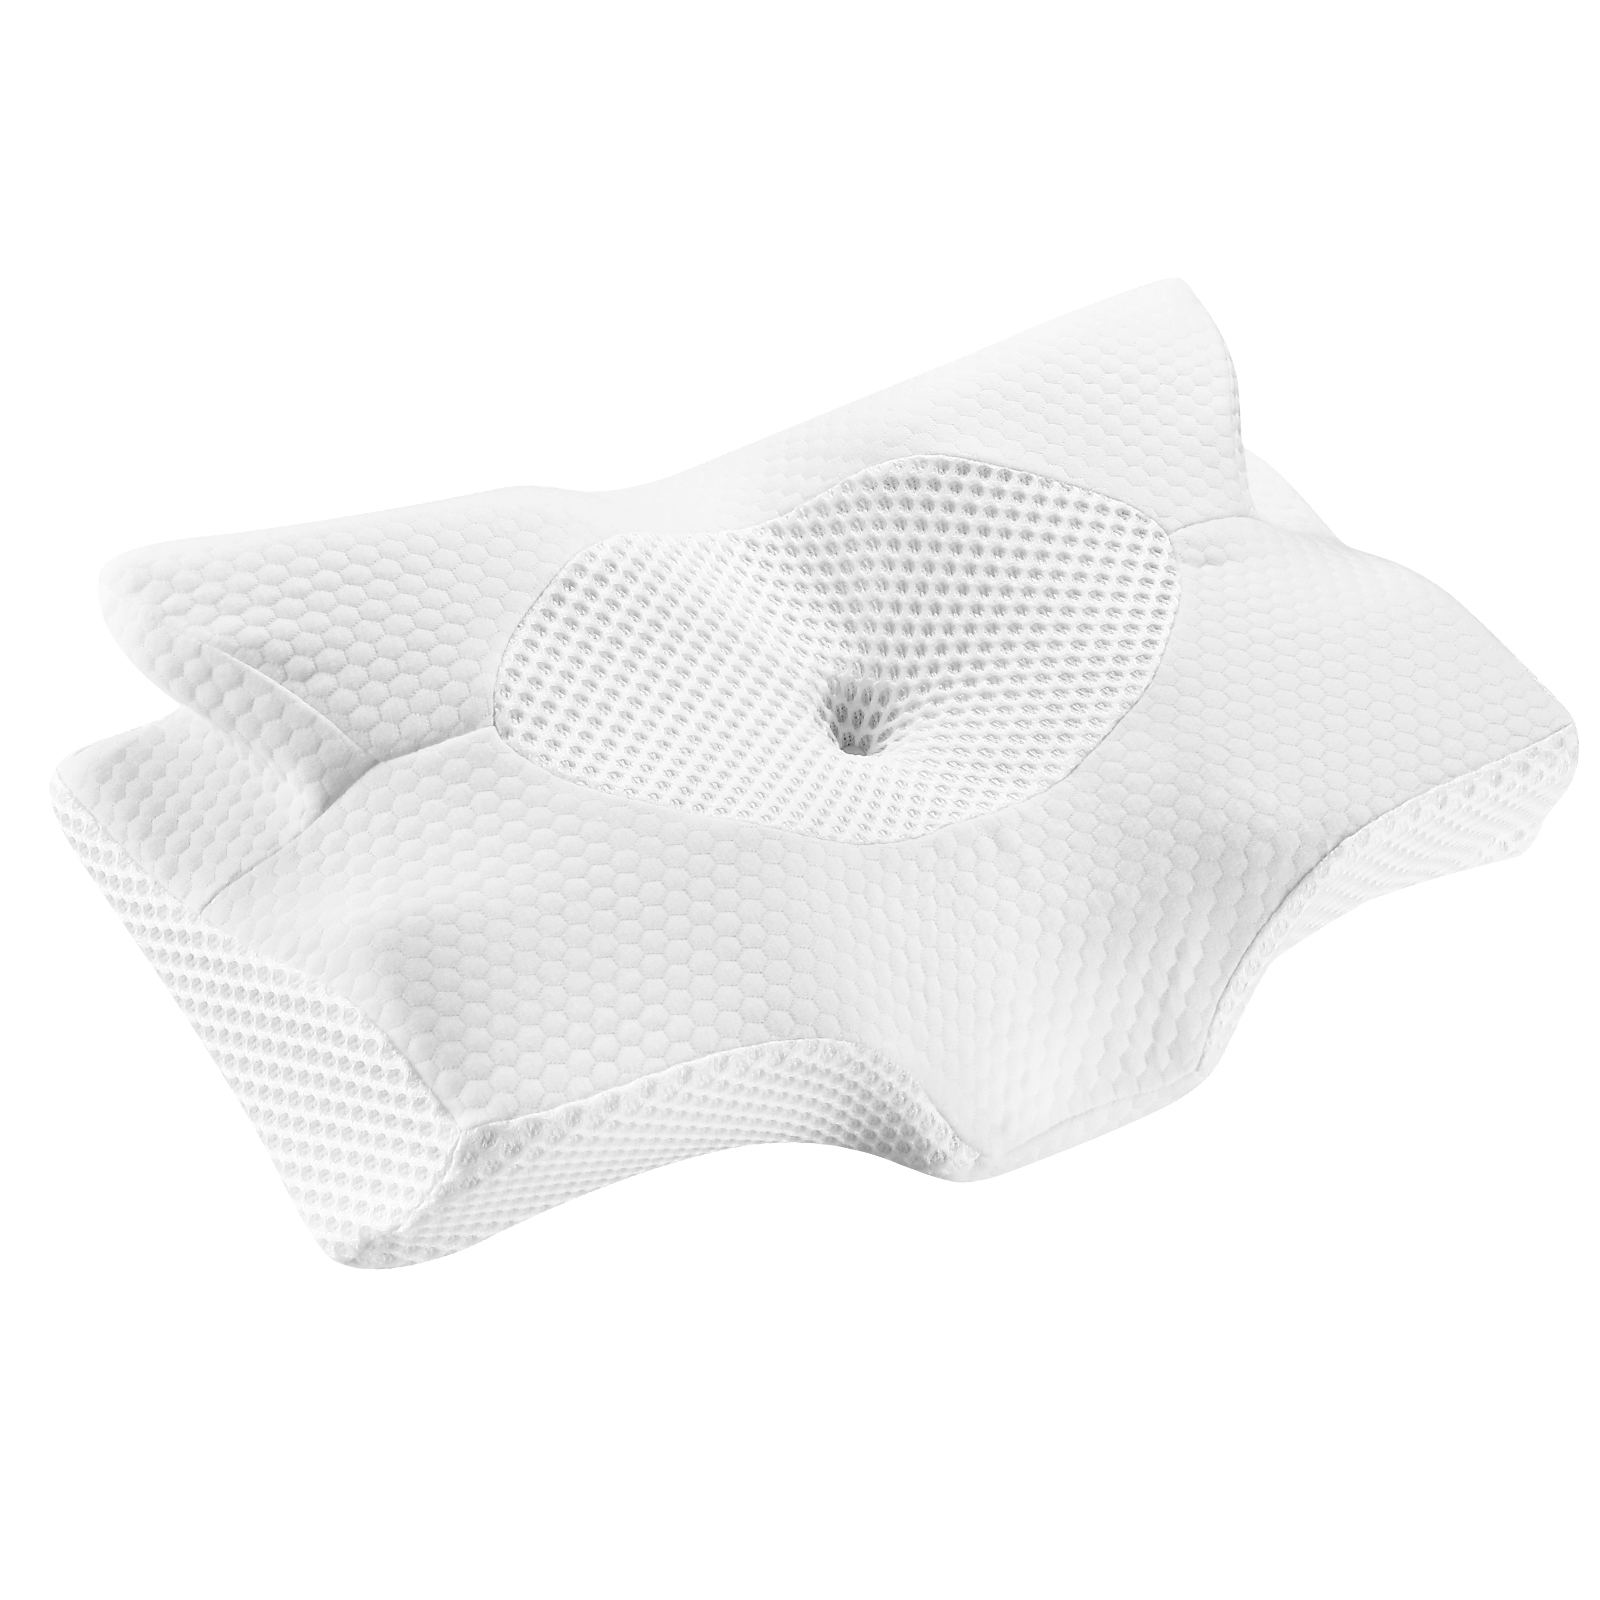 Luxdream Memory Foam Cervical Pillow